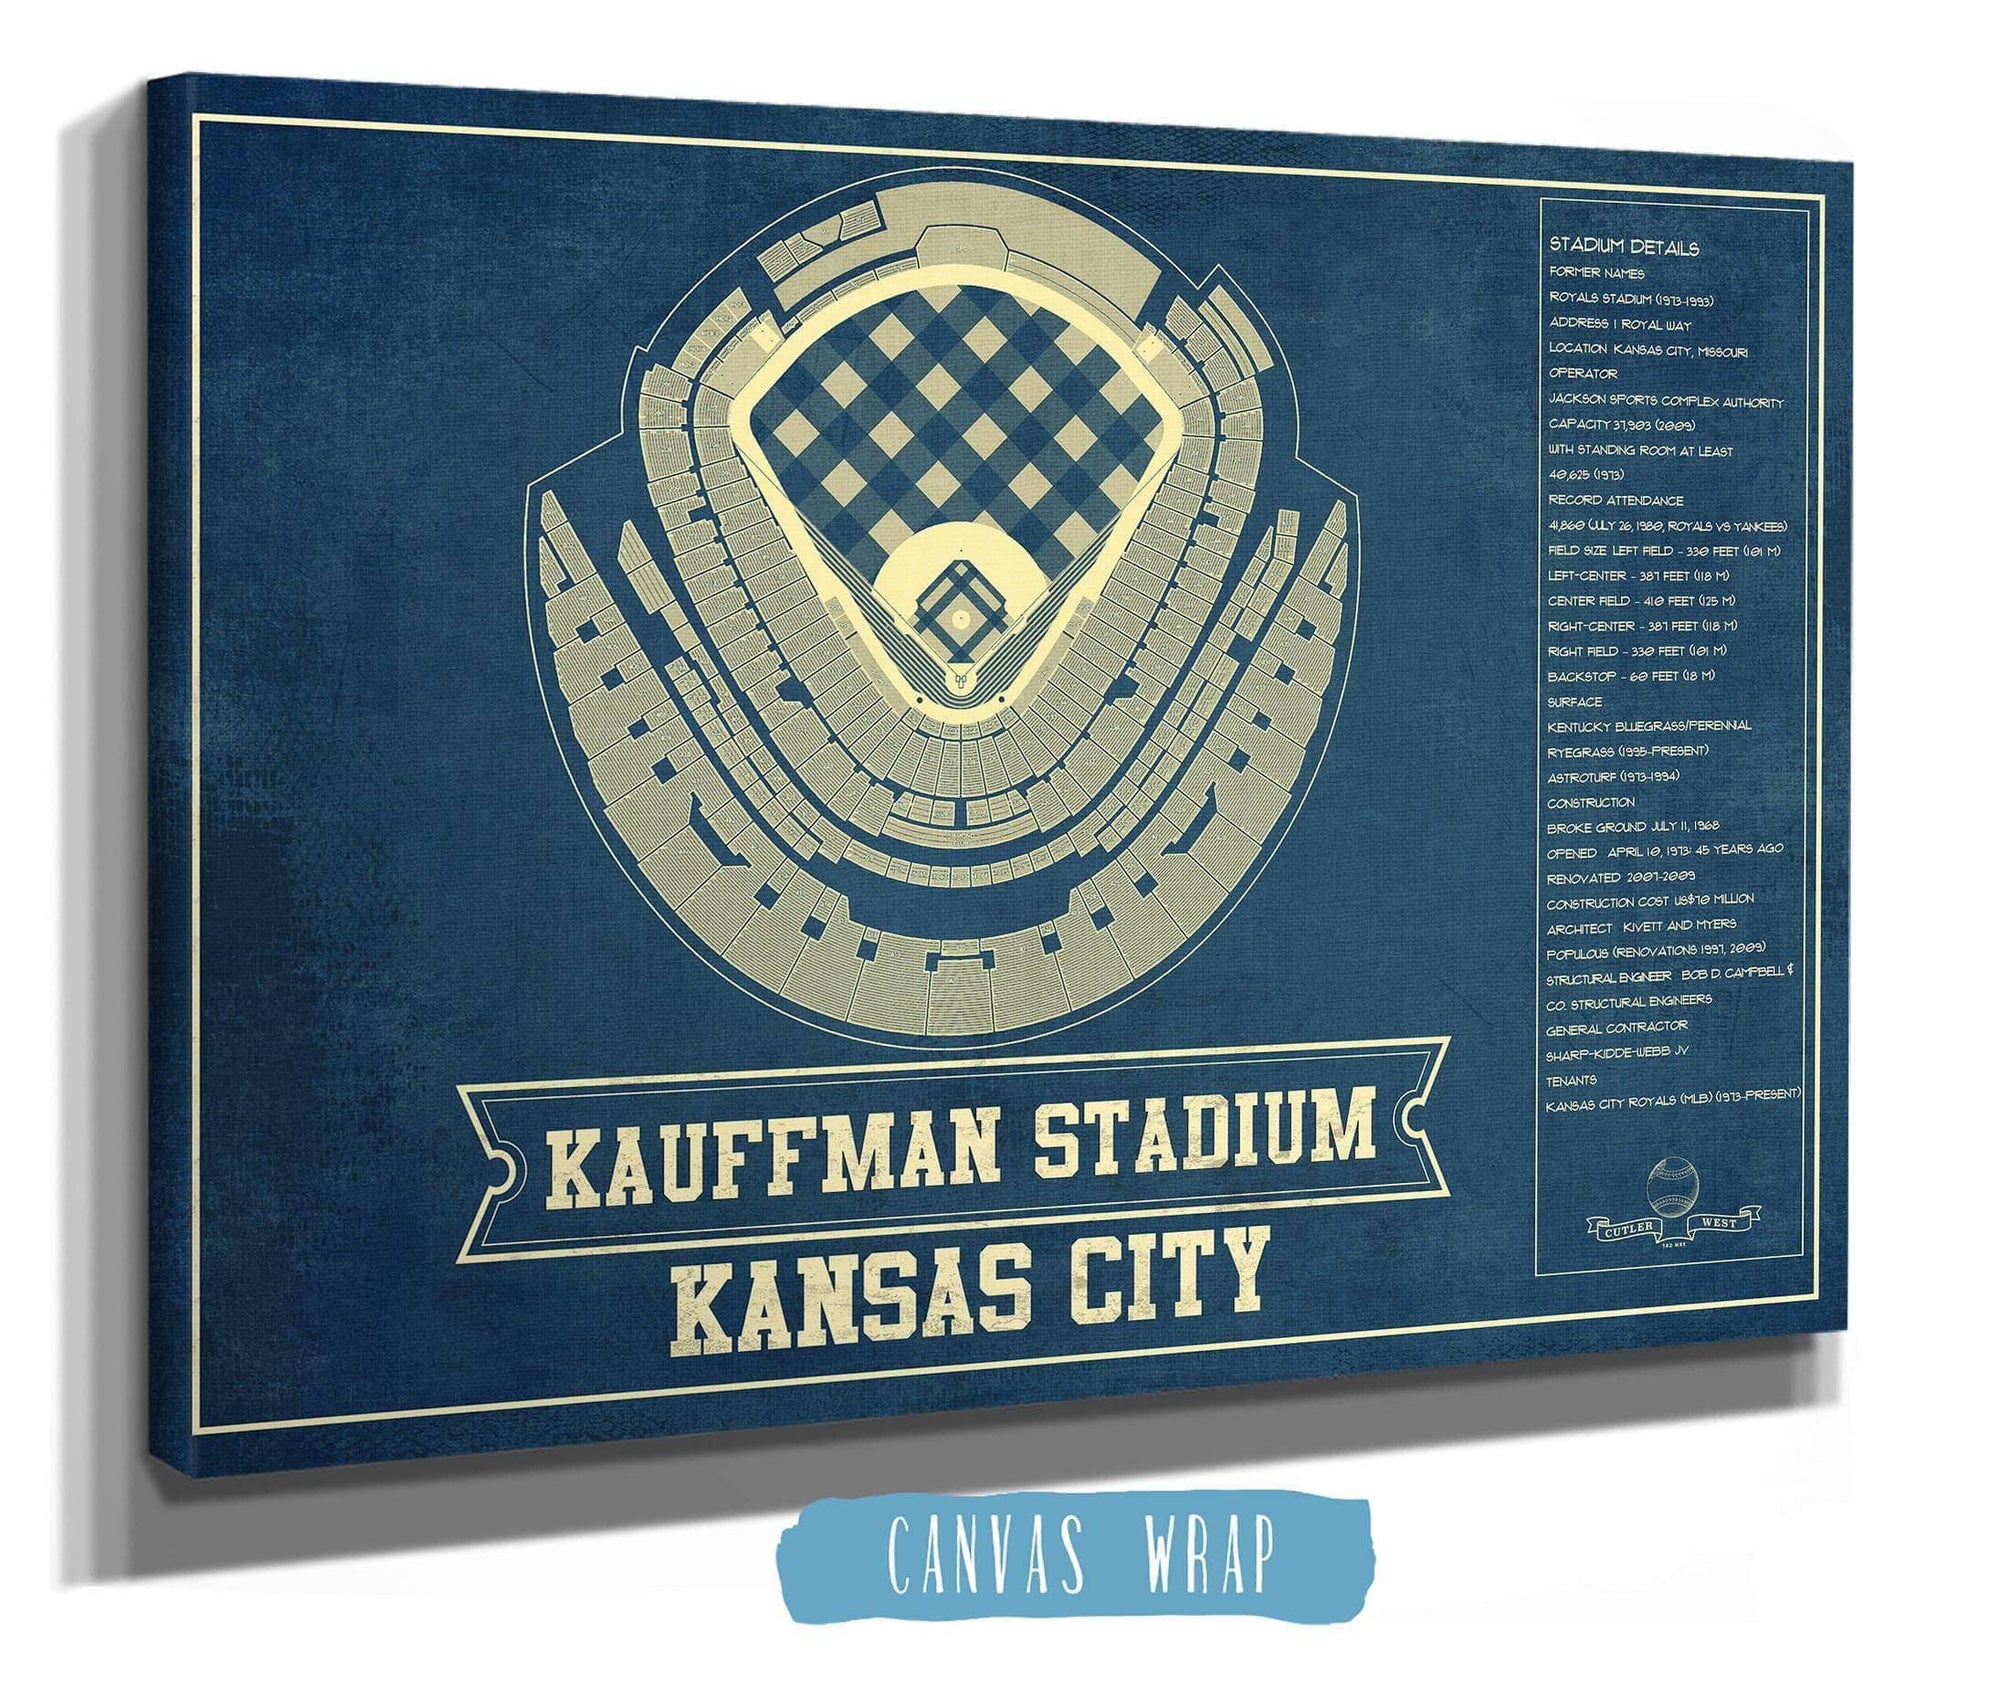 Cutler West Baseball Collection Kansas City Royals Kauffman Stadium Seating Chart - Vintage Baseball Fan Print